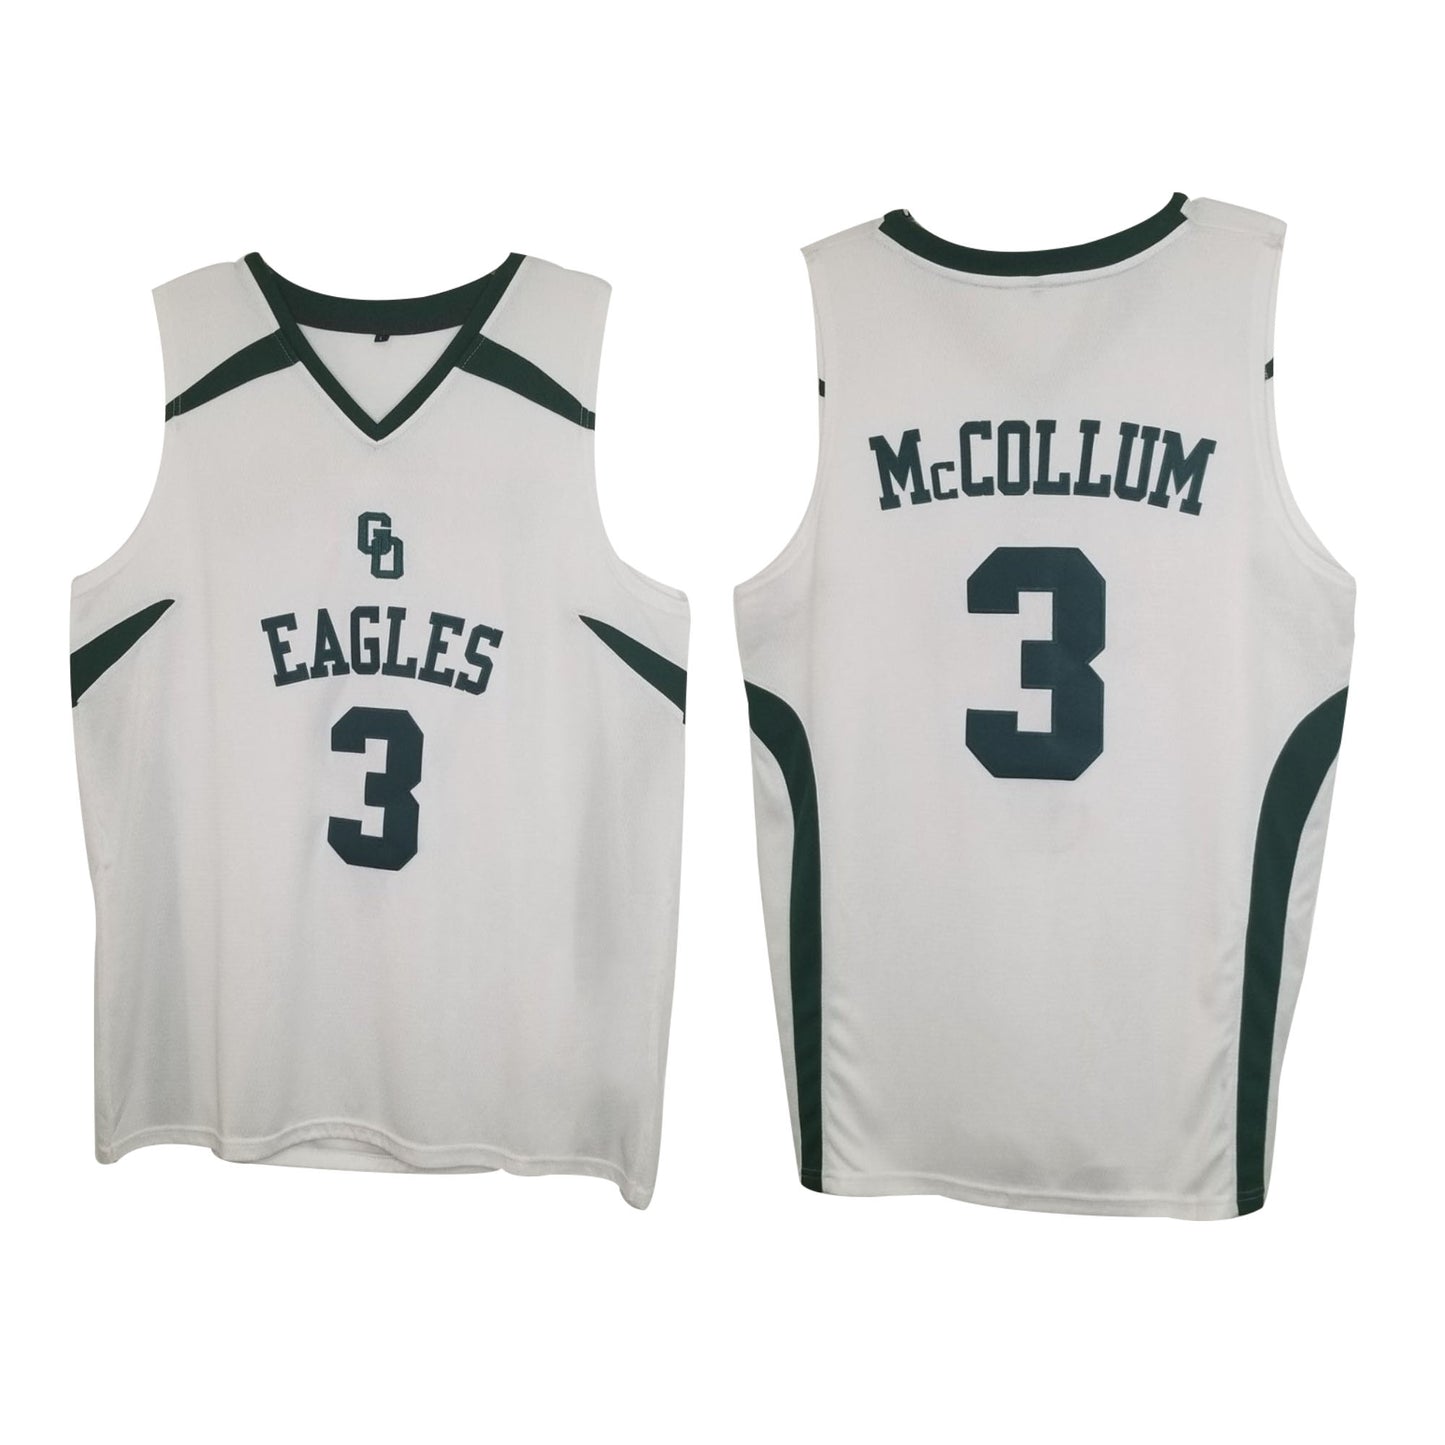 CJ McCollum High School 3 Basketball Jersey